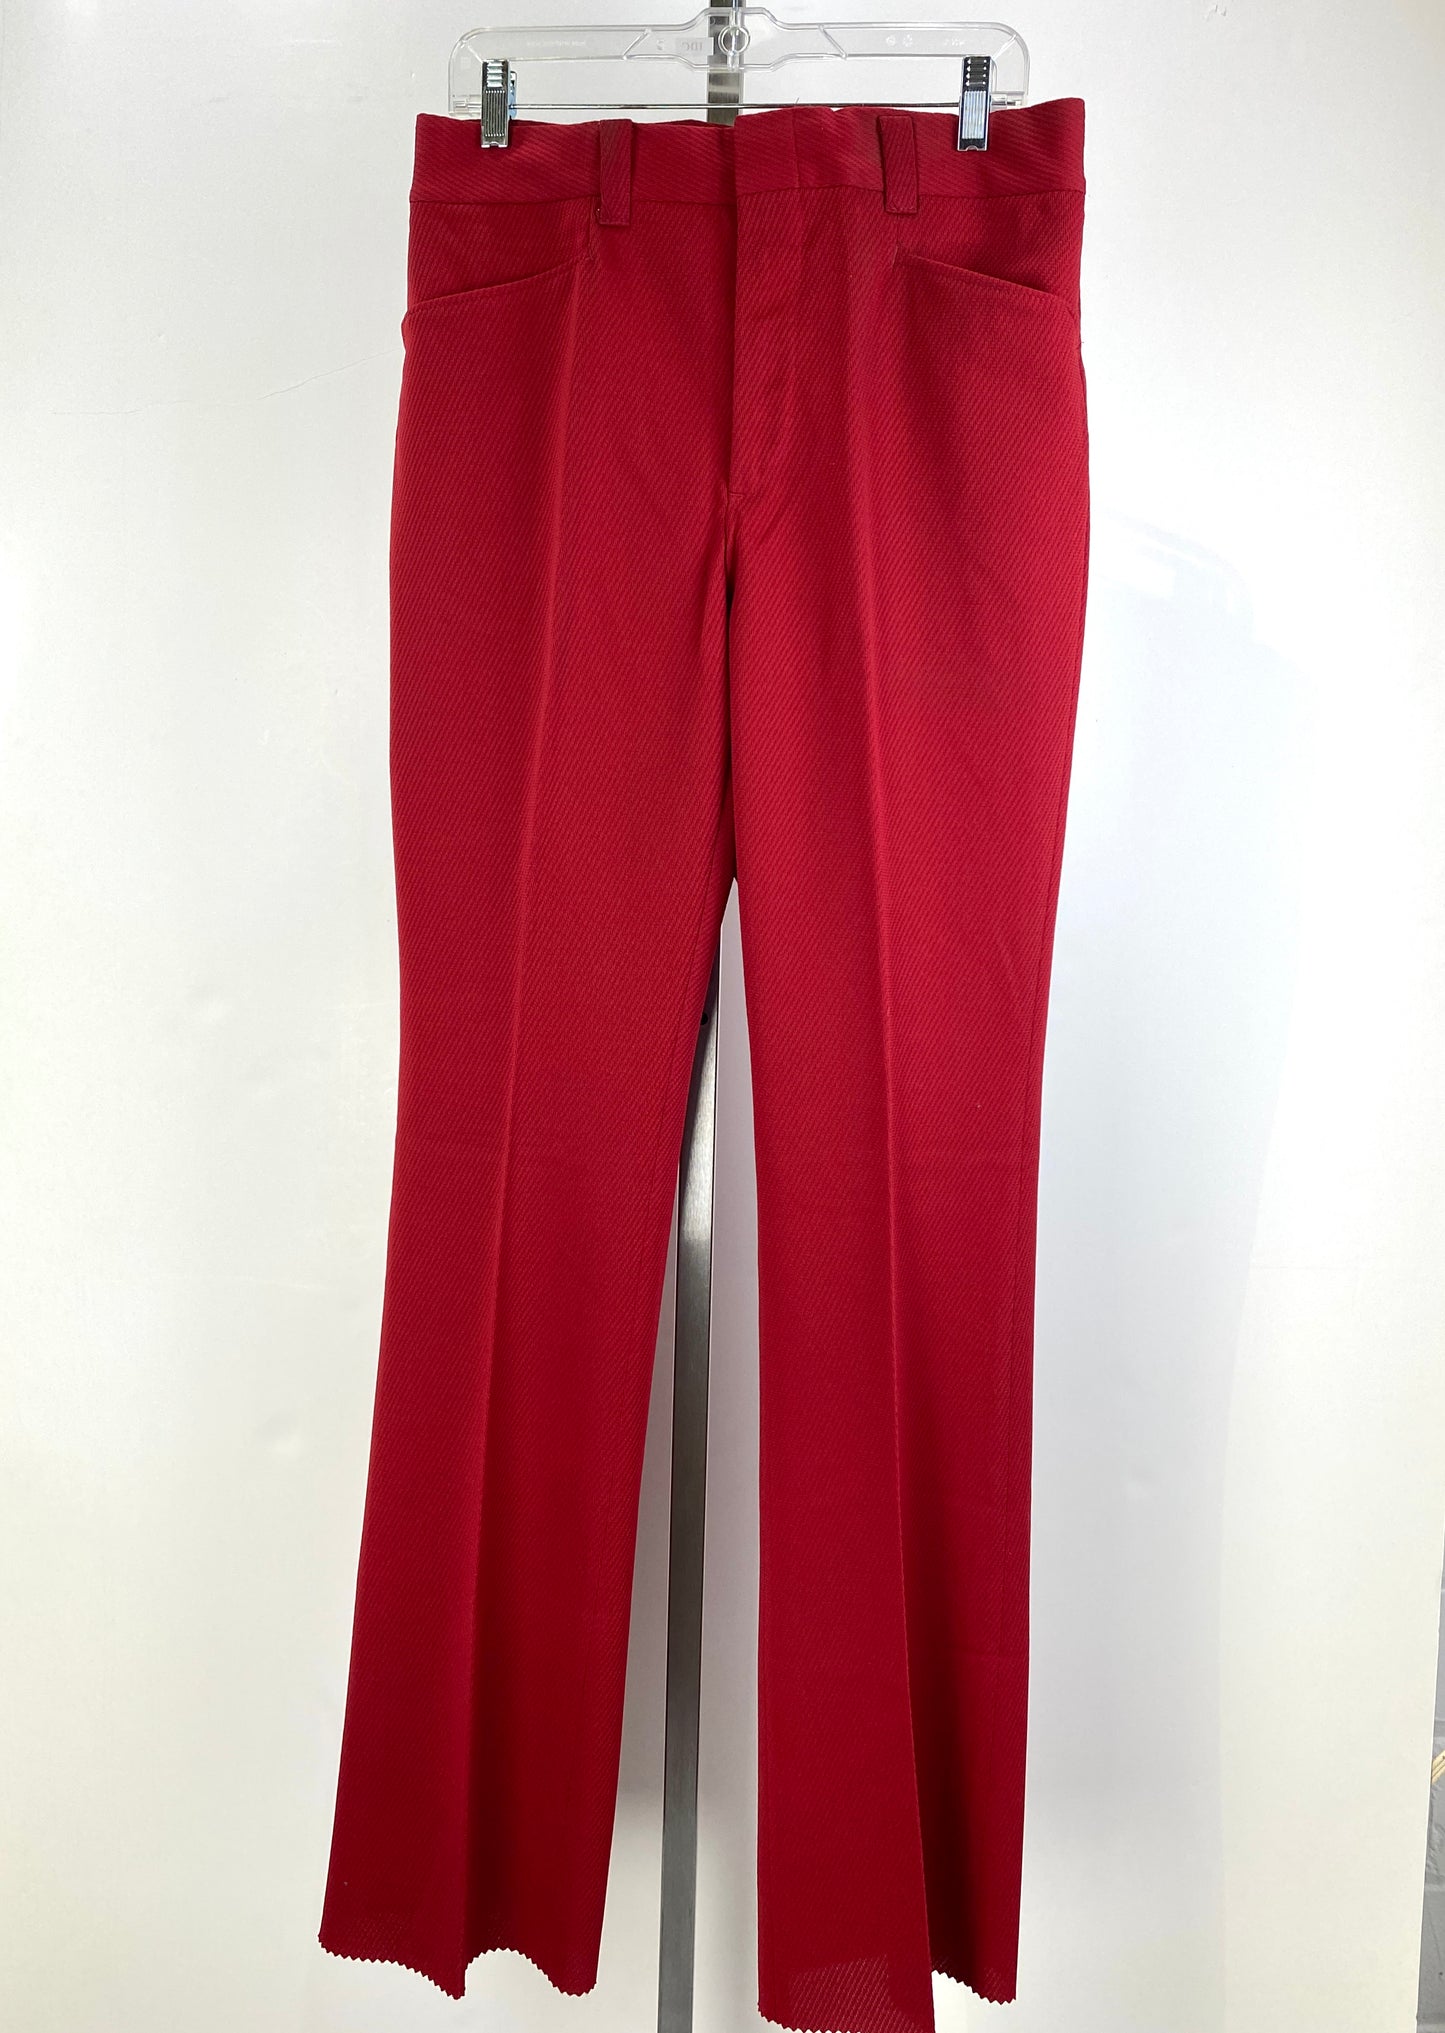 Vintage 1970s Deadstock Polyester Flared Trousers, Men's Red Slacks, NOS